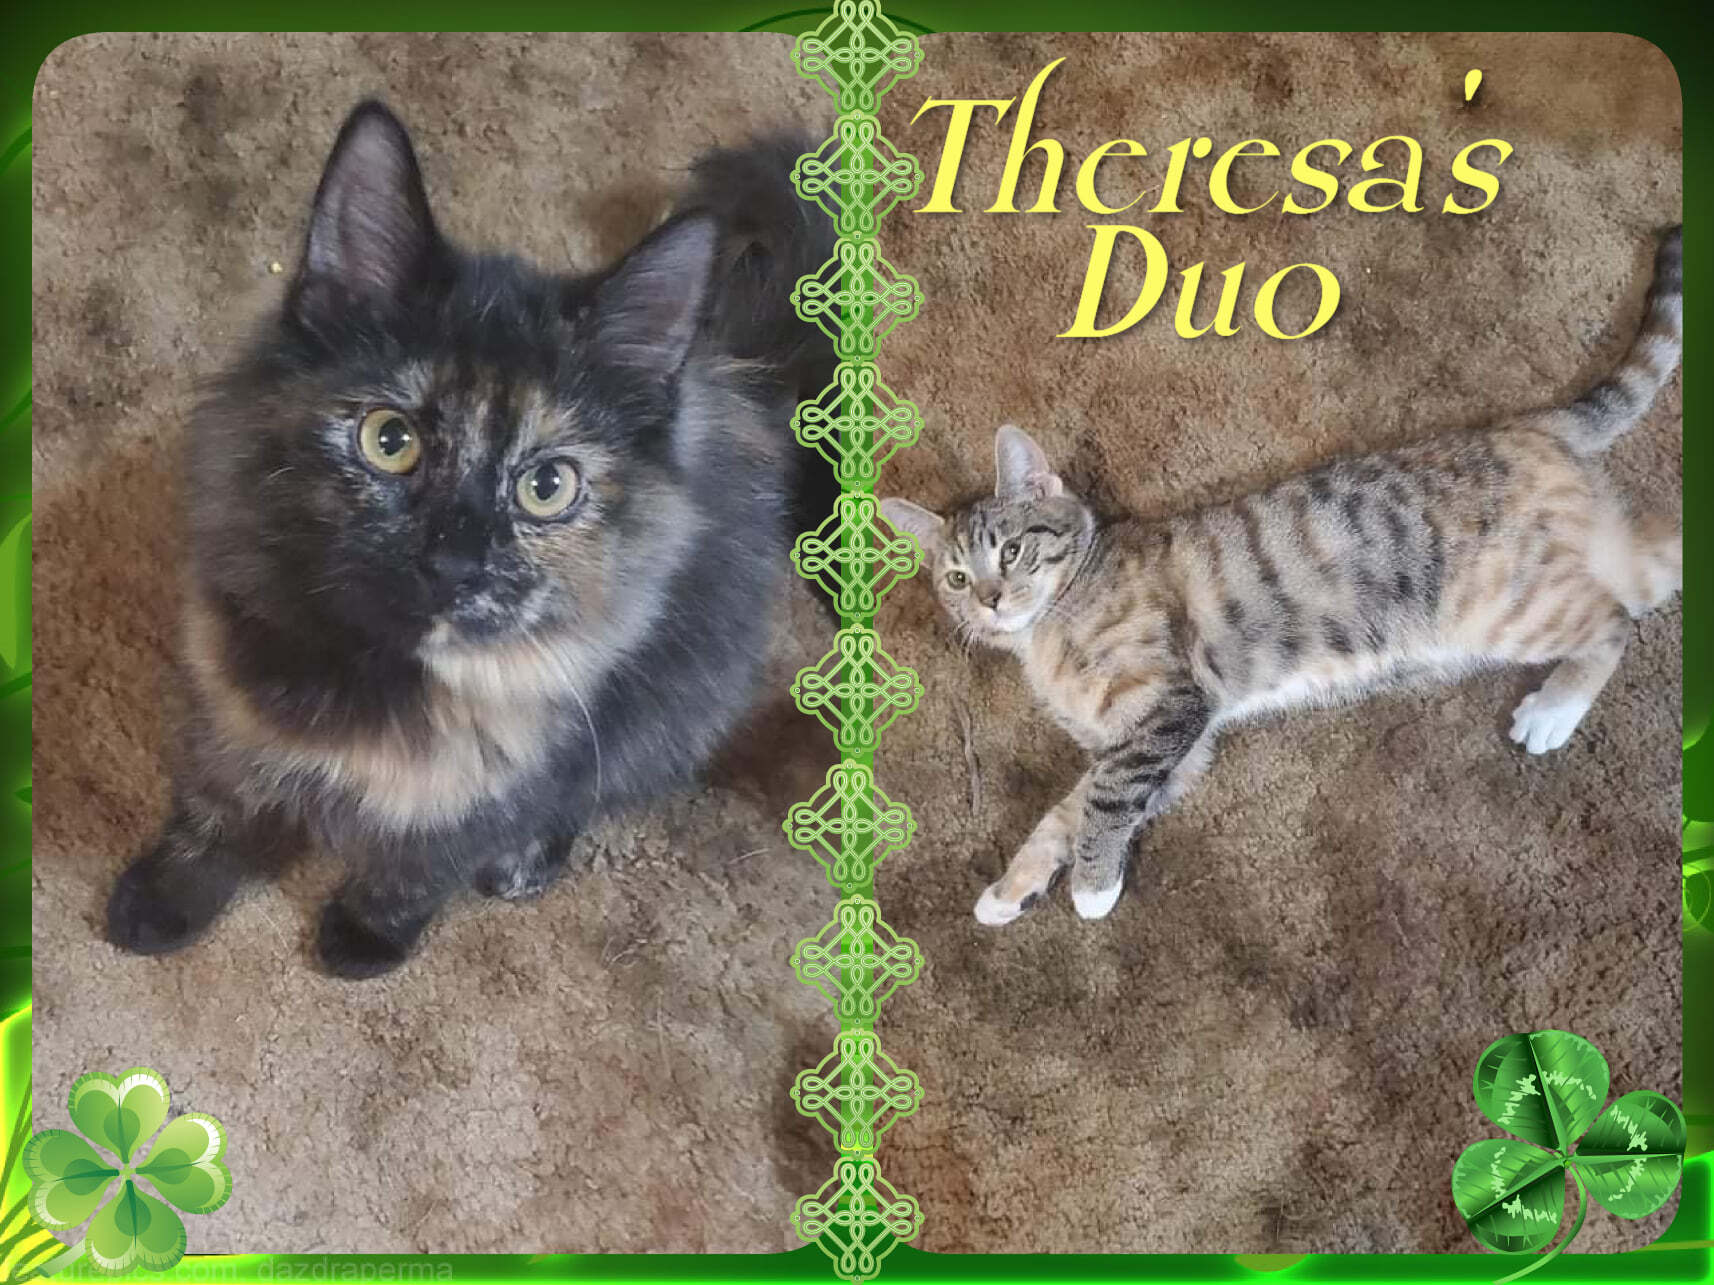 Theresa's Duo